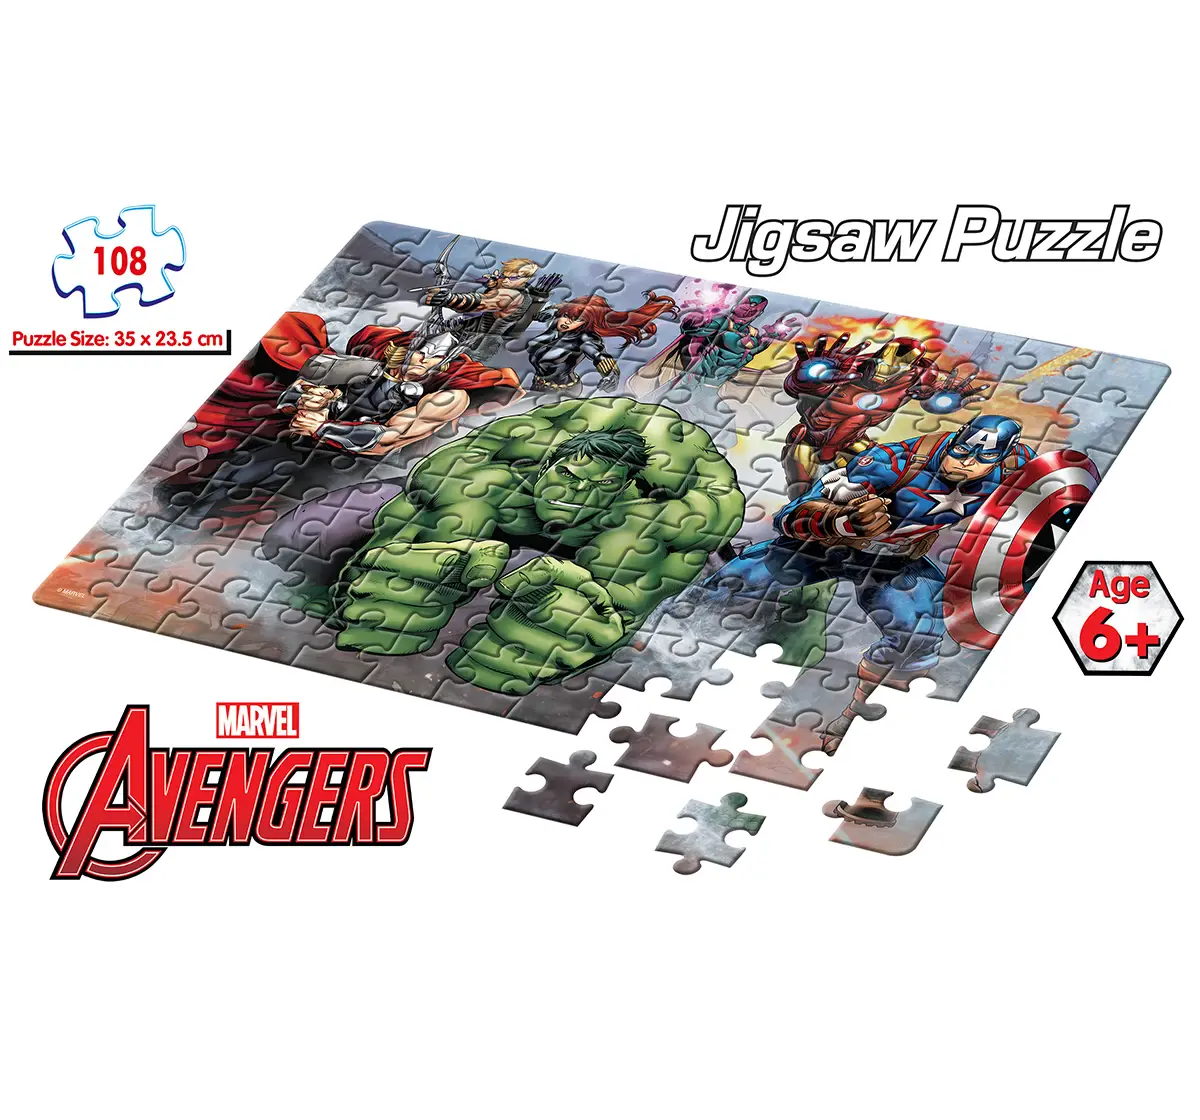 Shop Online Frank Marvel Avengers Jigsaw Puzzle (108 Pc), 6Y+